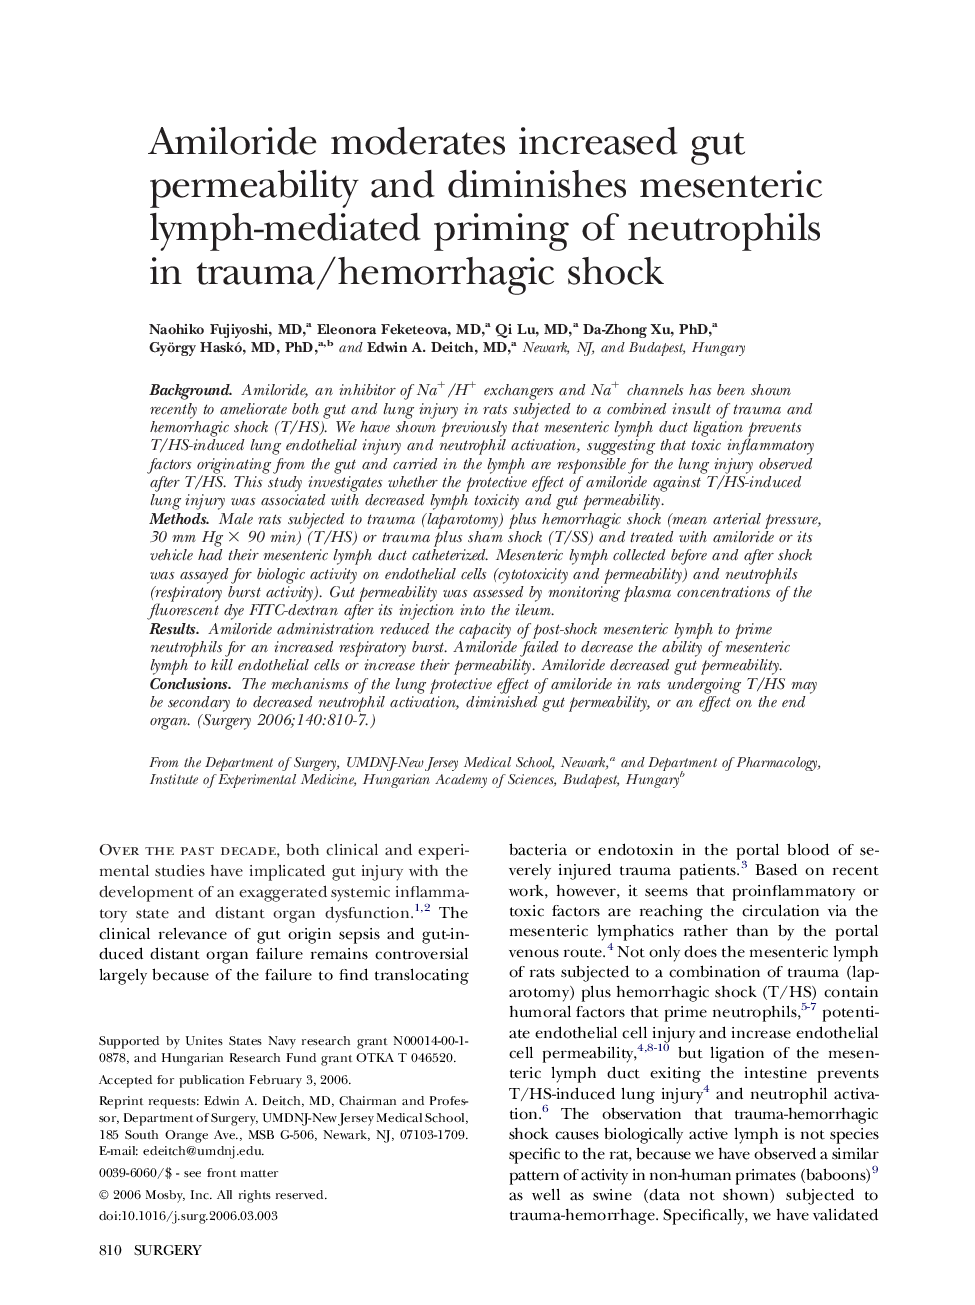 Amiloride moderates increased gut permeability and diminishes mesenteric lymph-mediated priming of neutrophils in trauma/hemorrhagic shock 